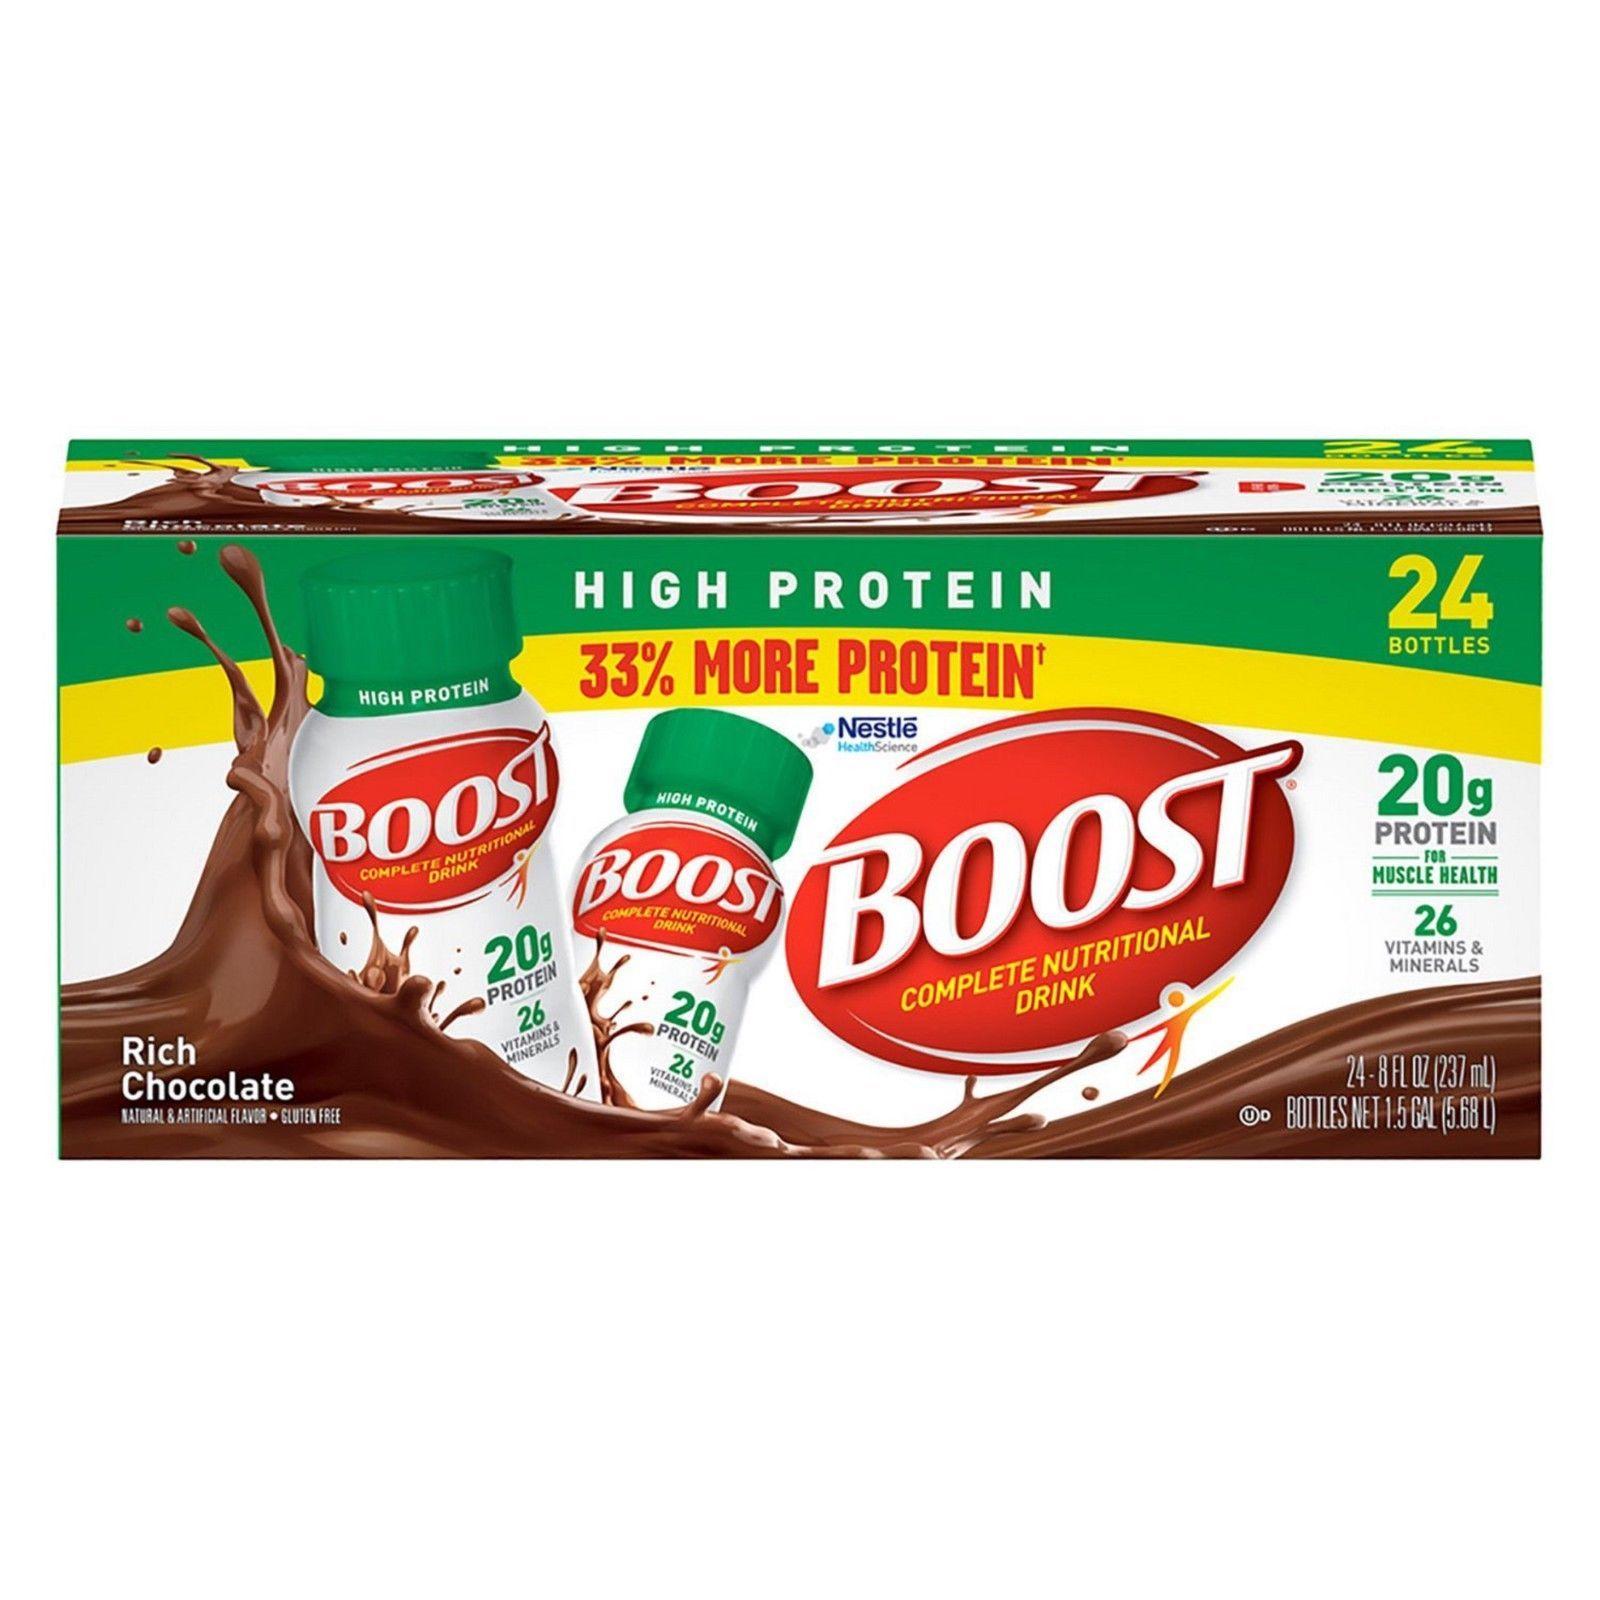 Boost Drink Logo - BOOST High Protein Chocolate - 24 PK | eBay